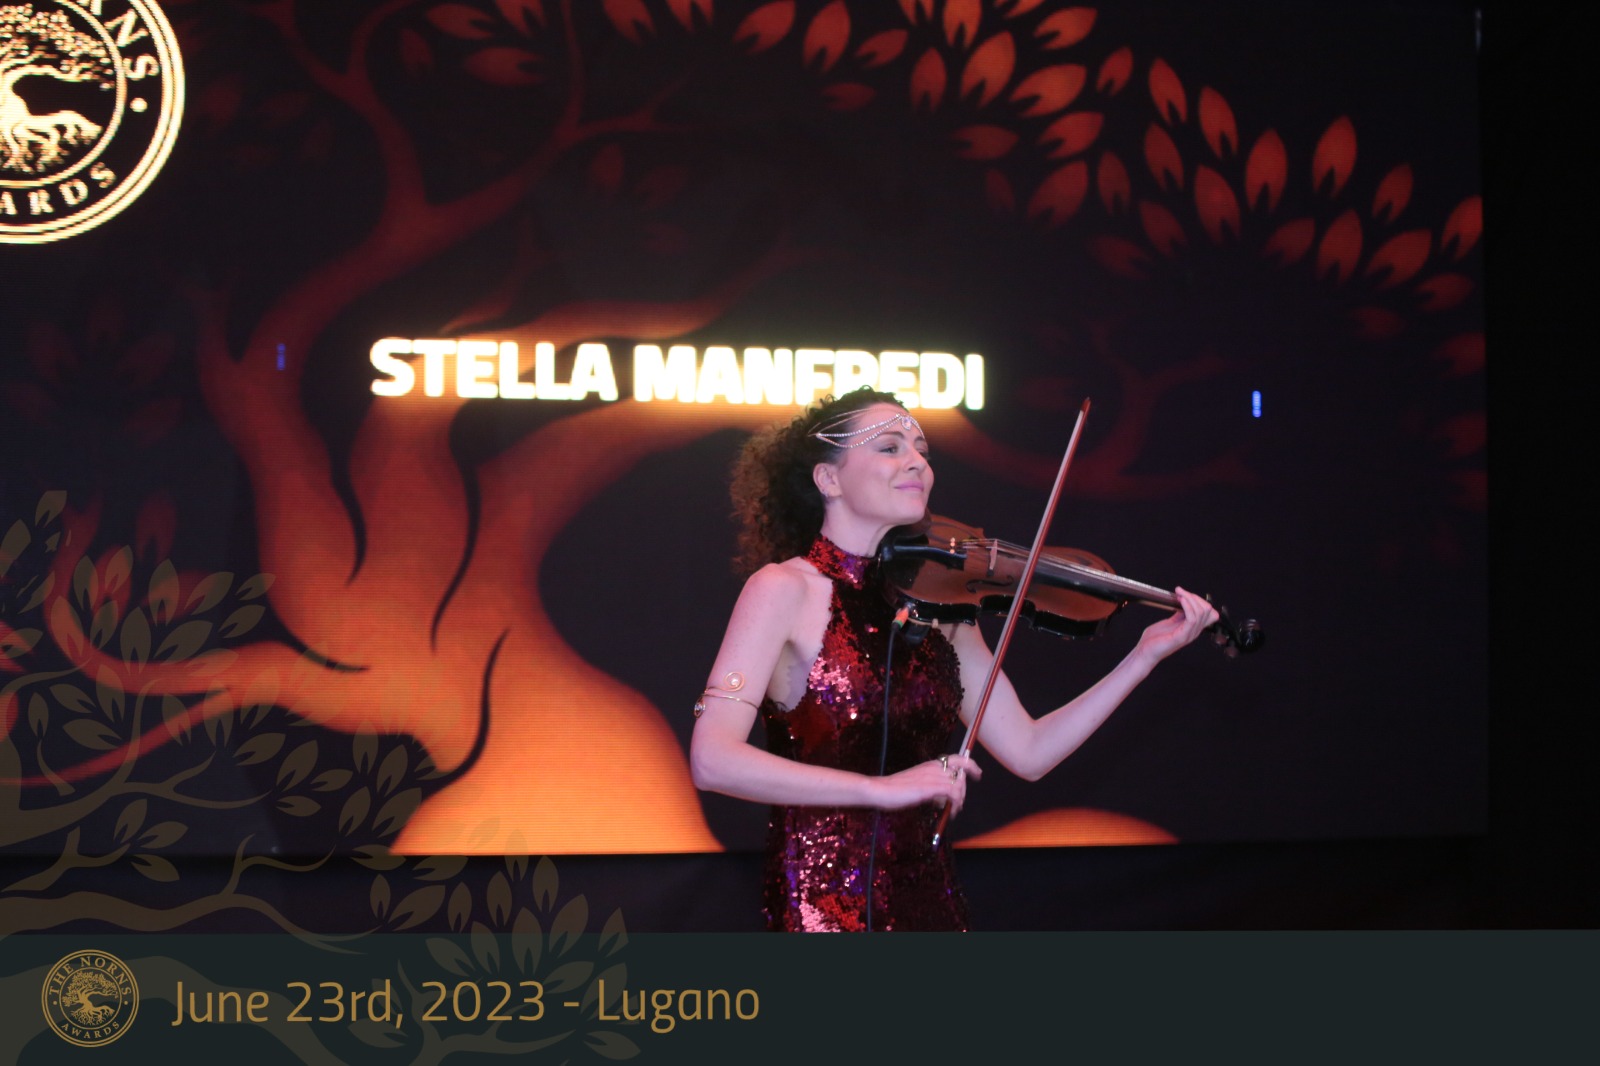 Stella Manfredi